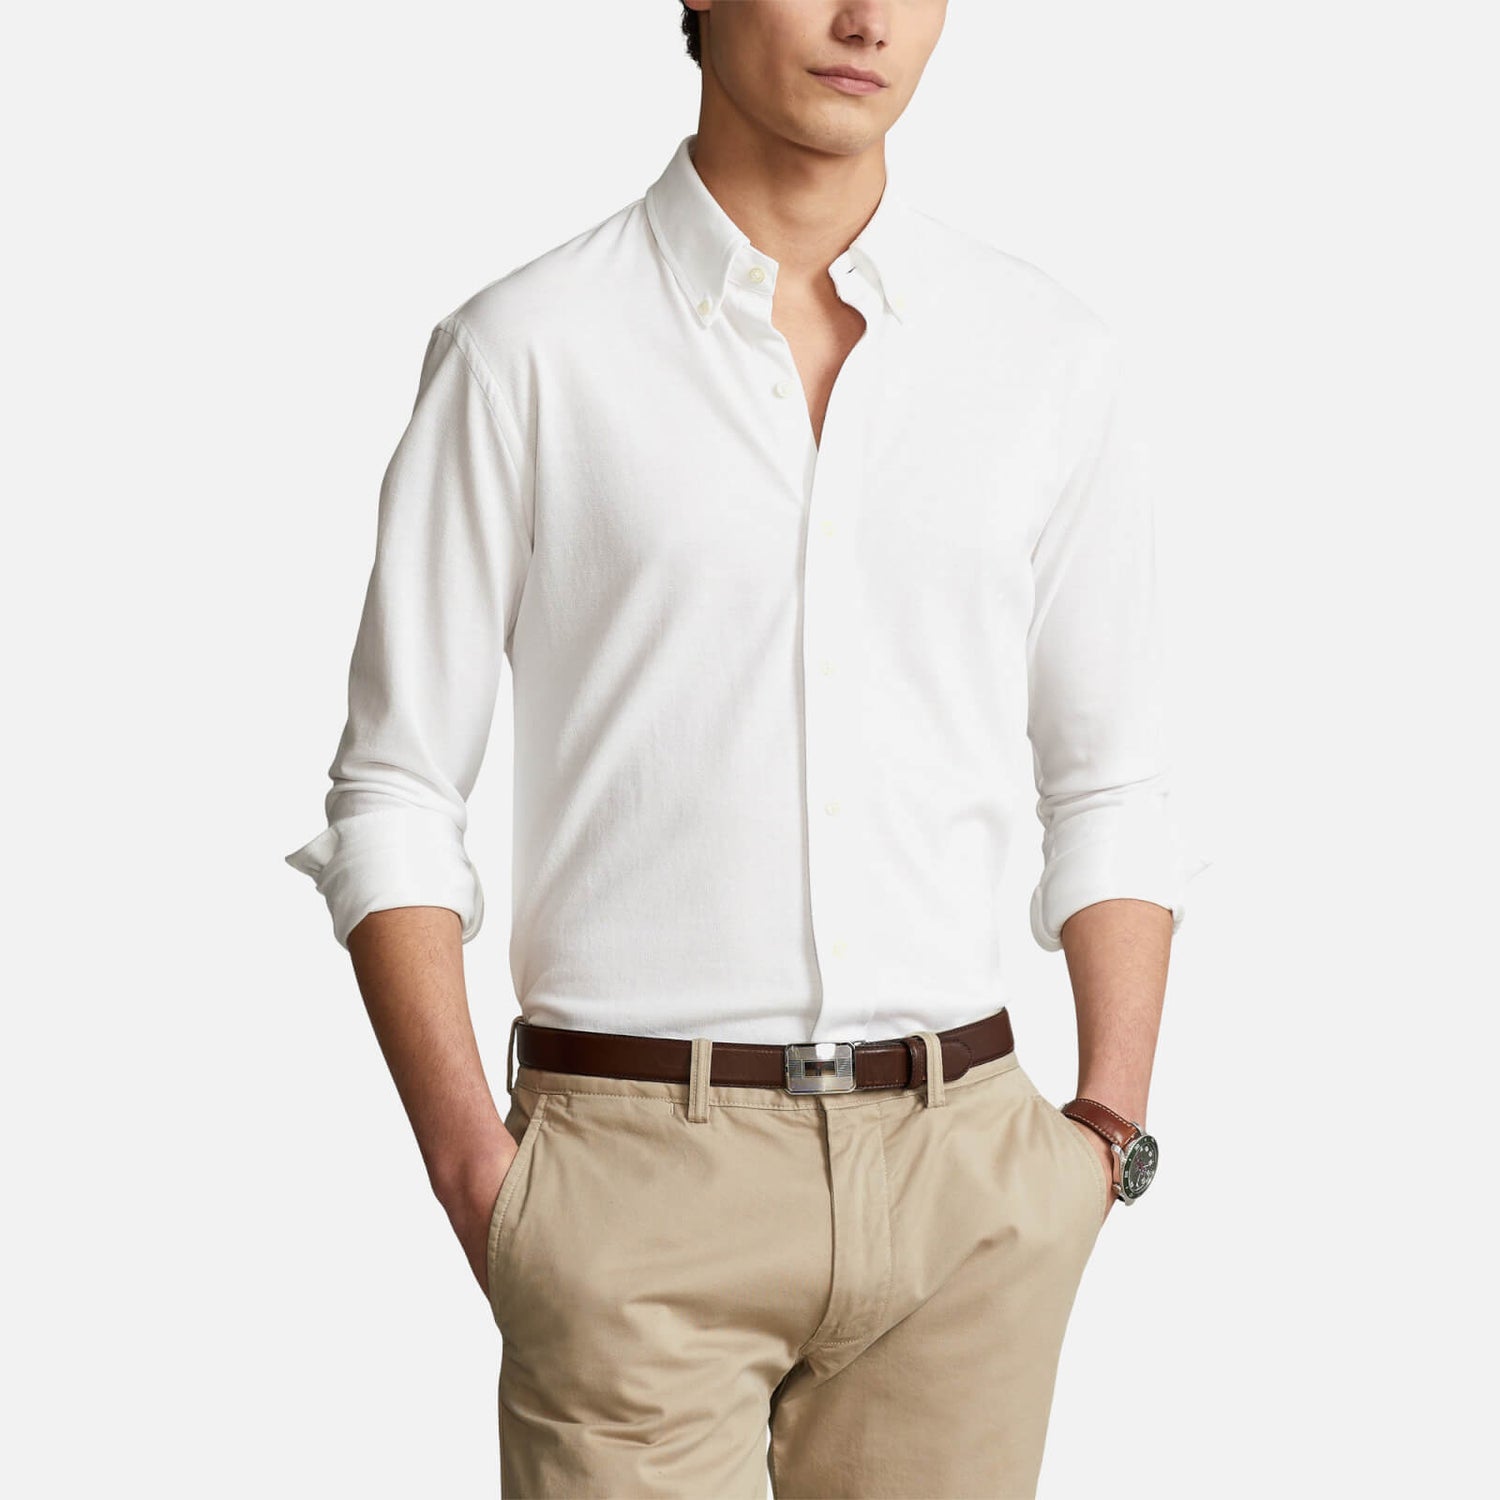 Polo Ralph Lauren Men's Oxford Mesh Shirt - White - L